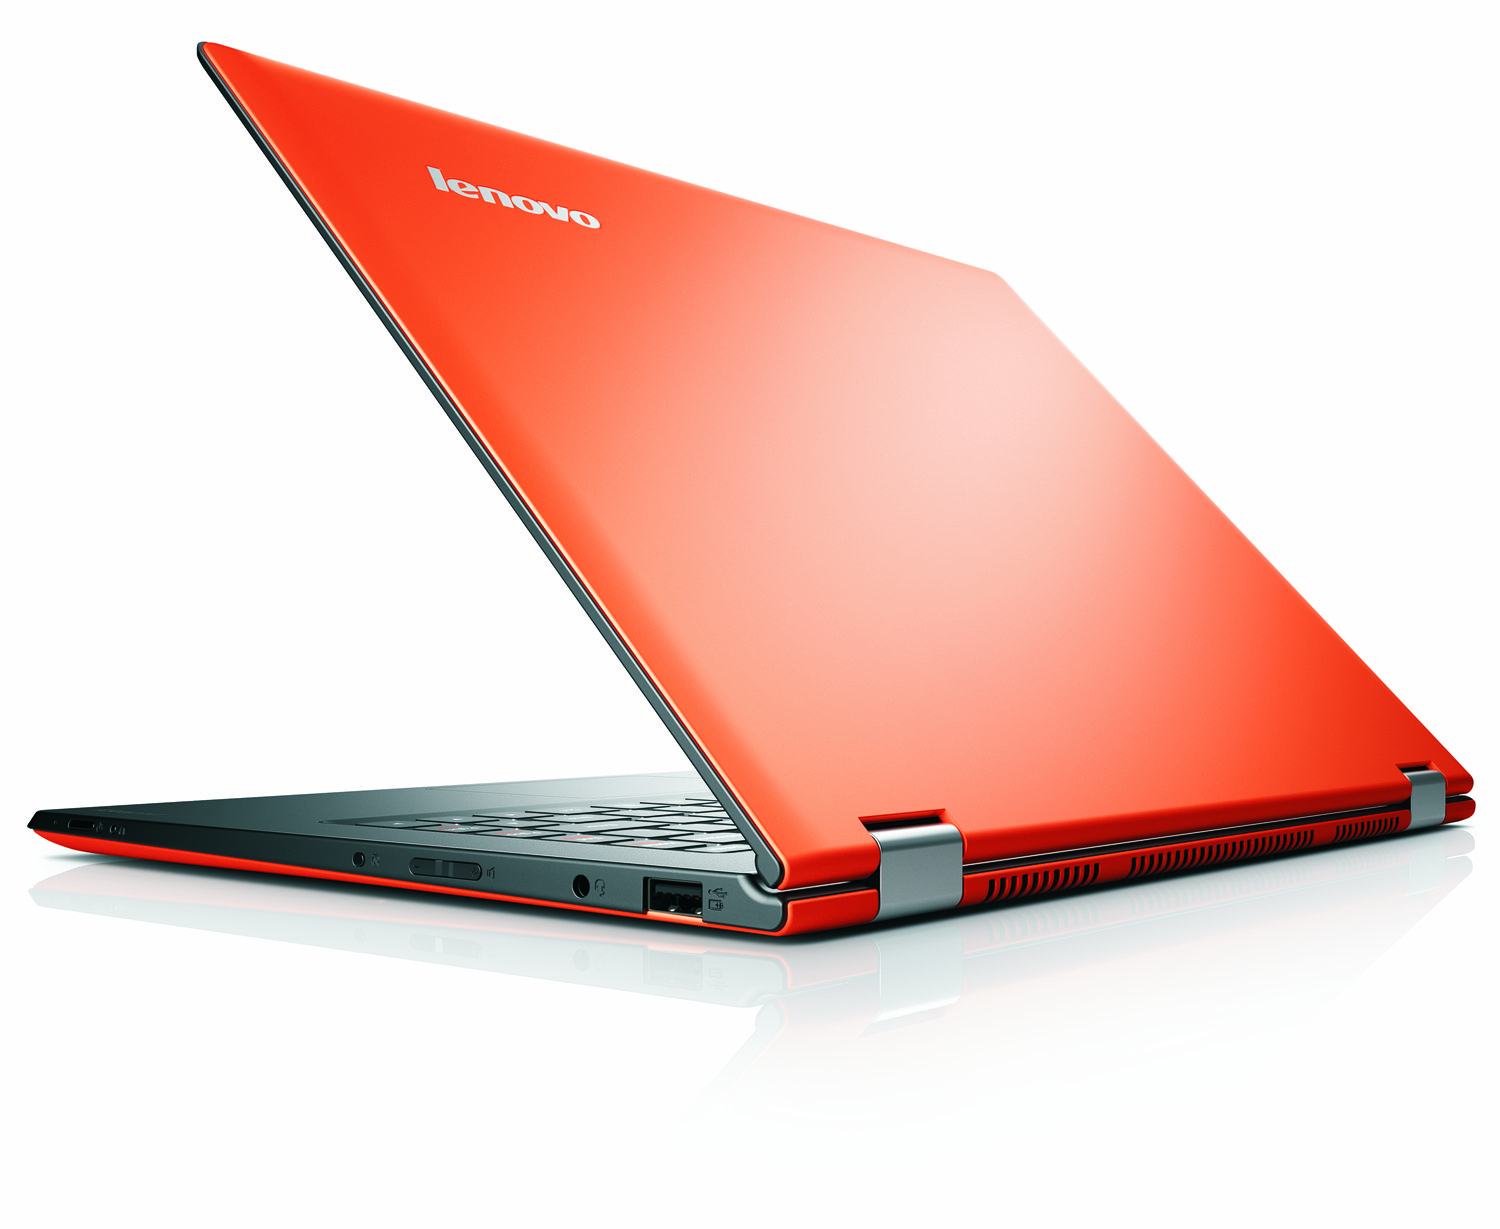 Lenovo S New Yoga 2 Pro Has The Same Flexible Hinge 3200 1800